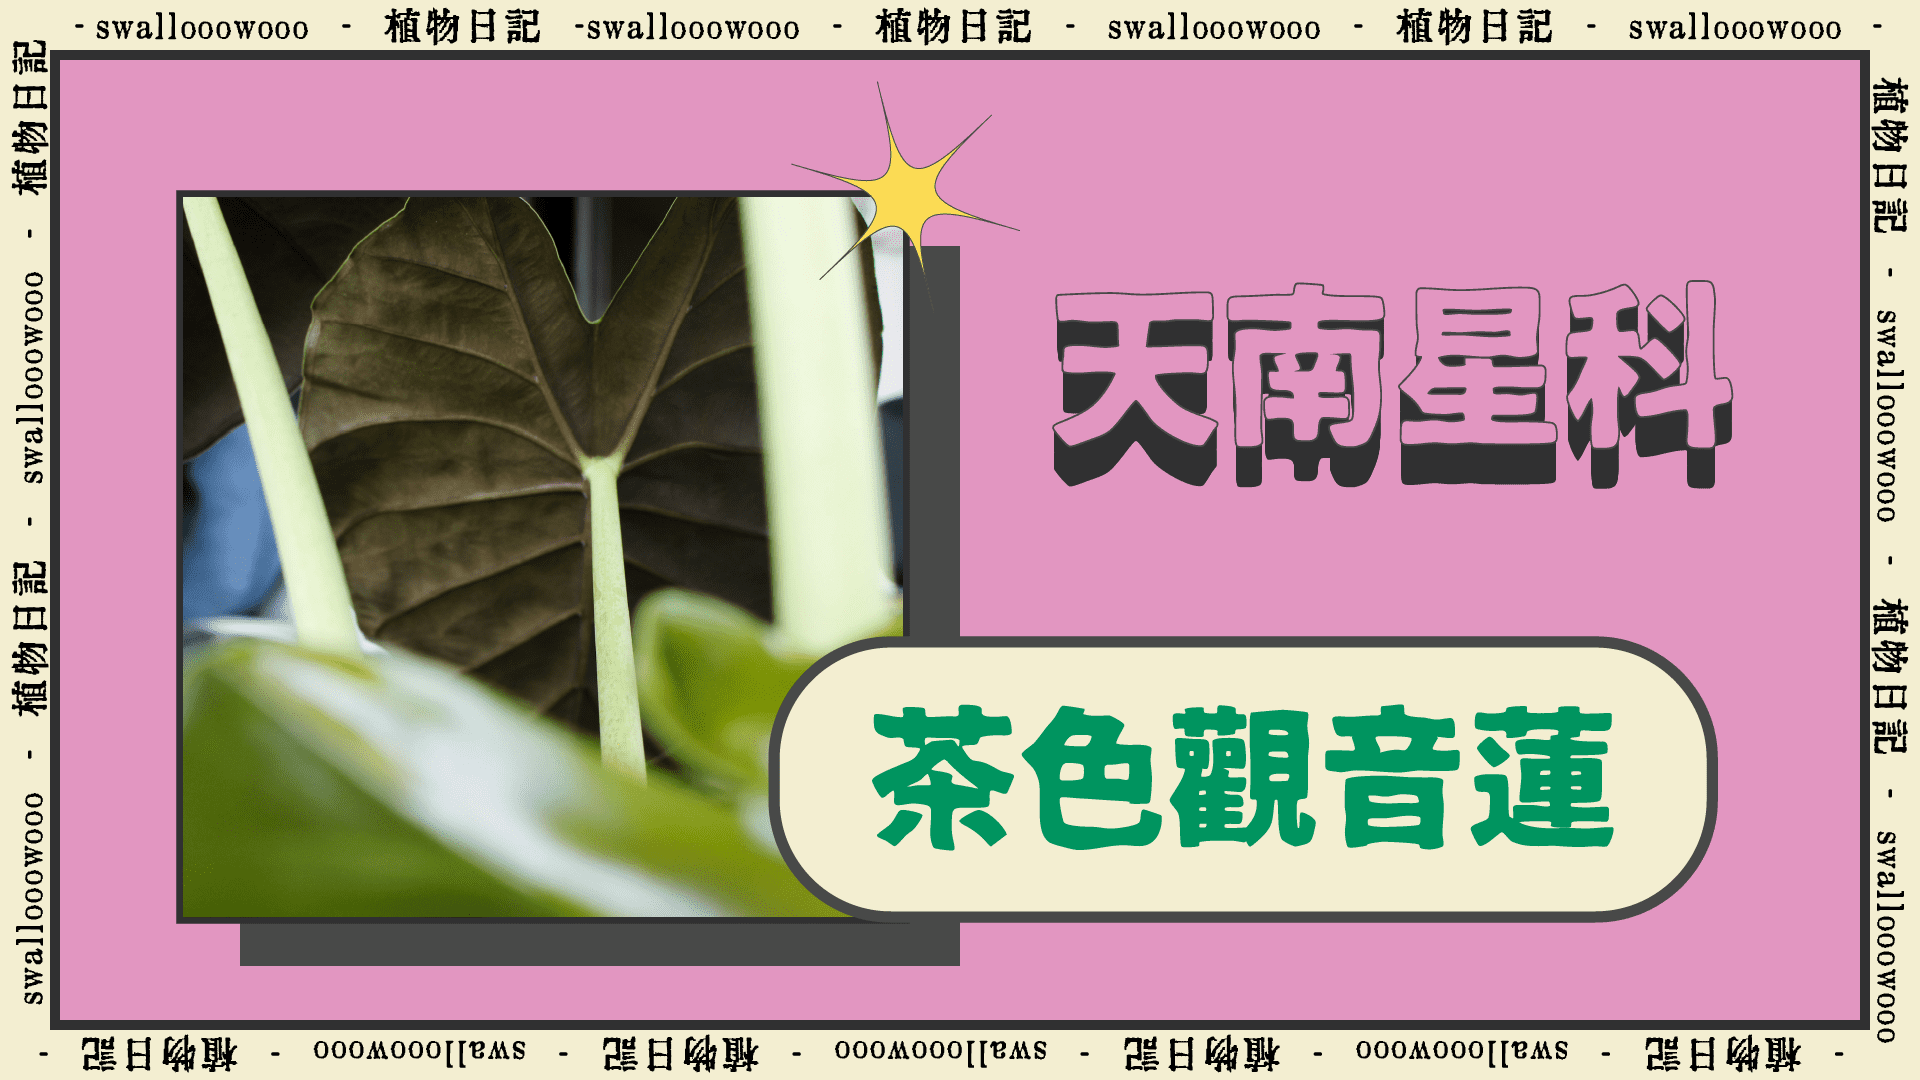 1920-1080-植物日記-茶色觀音蓮 Alocasia Wentii-swallooowooo